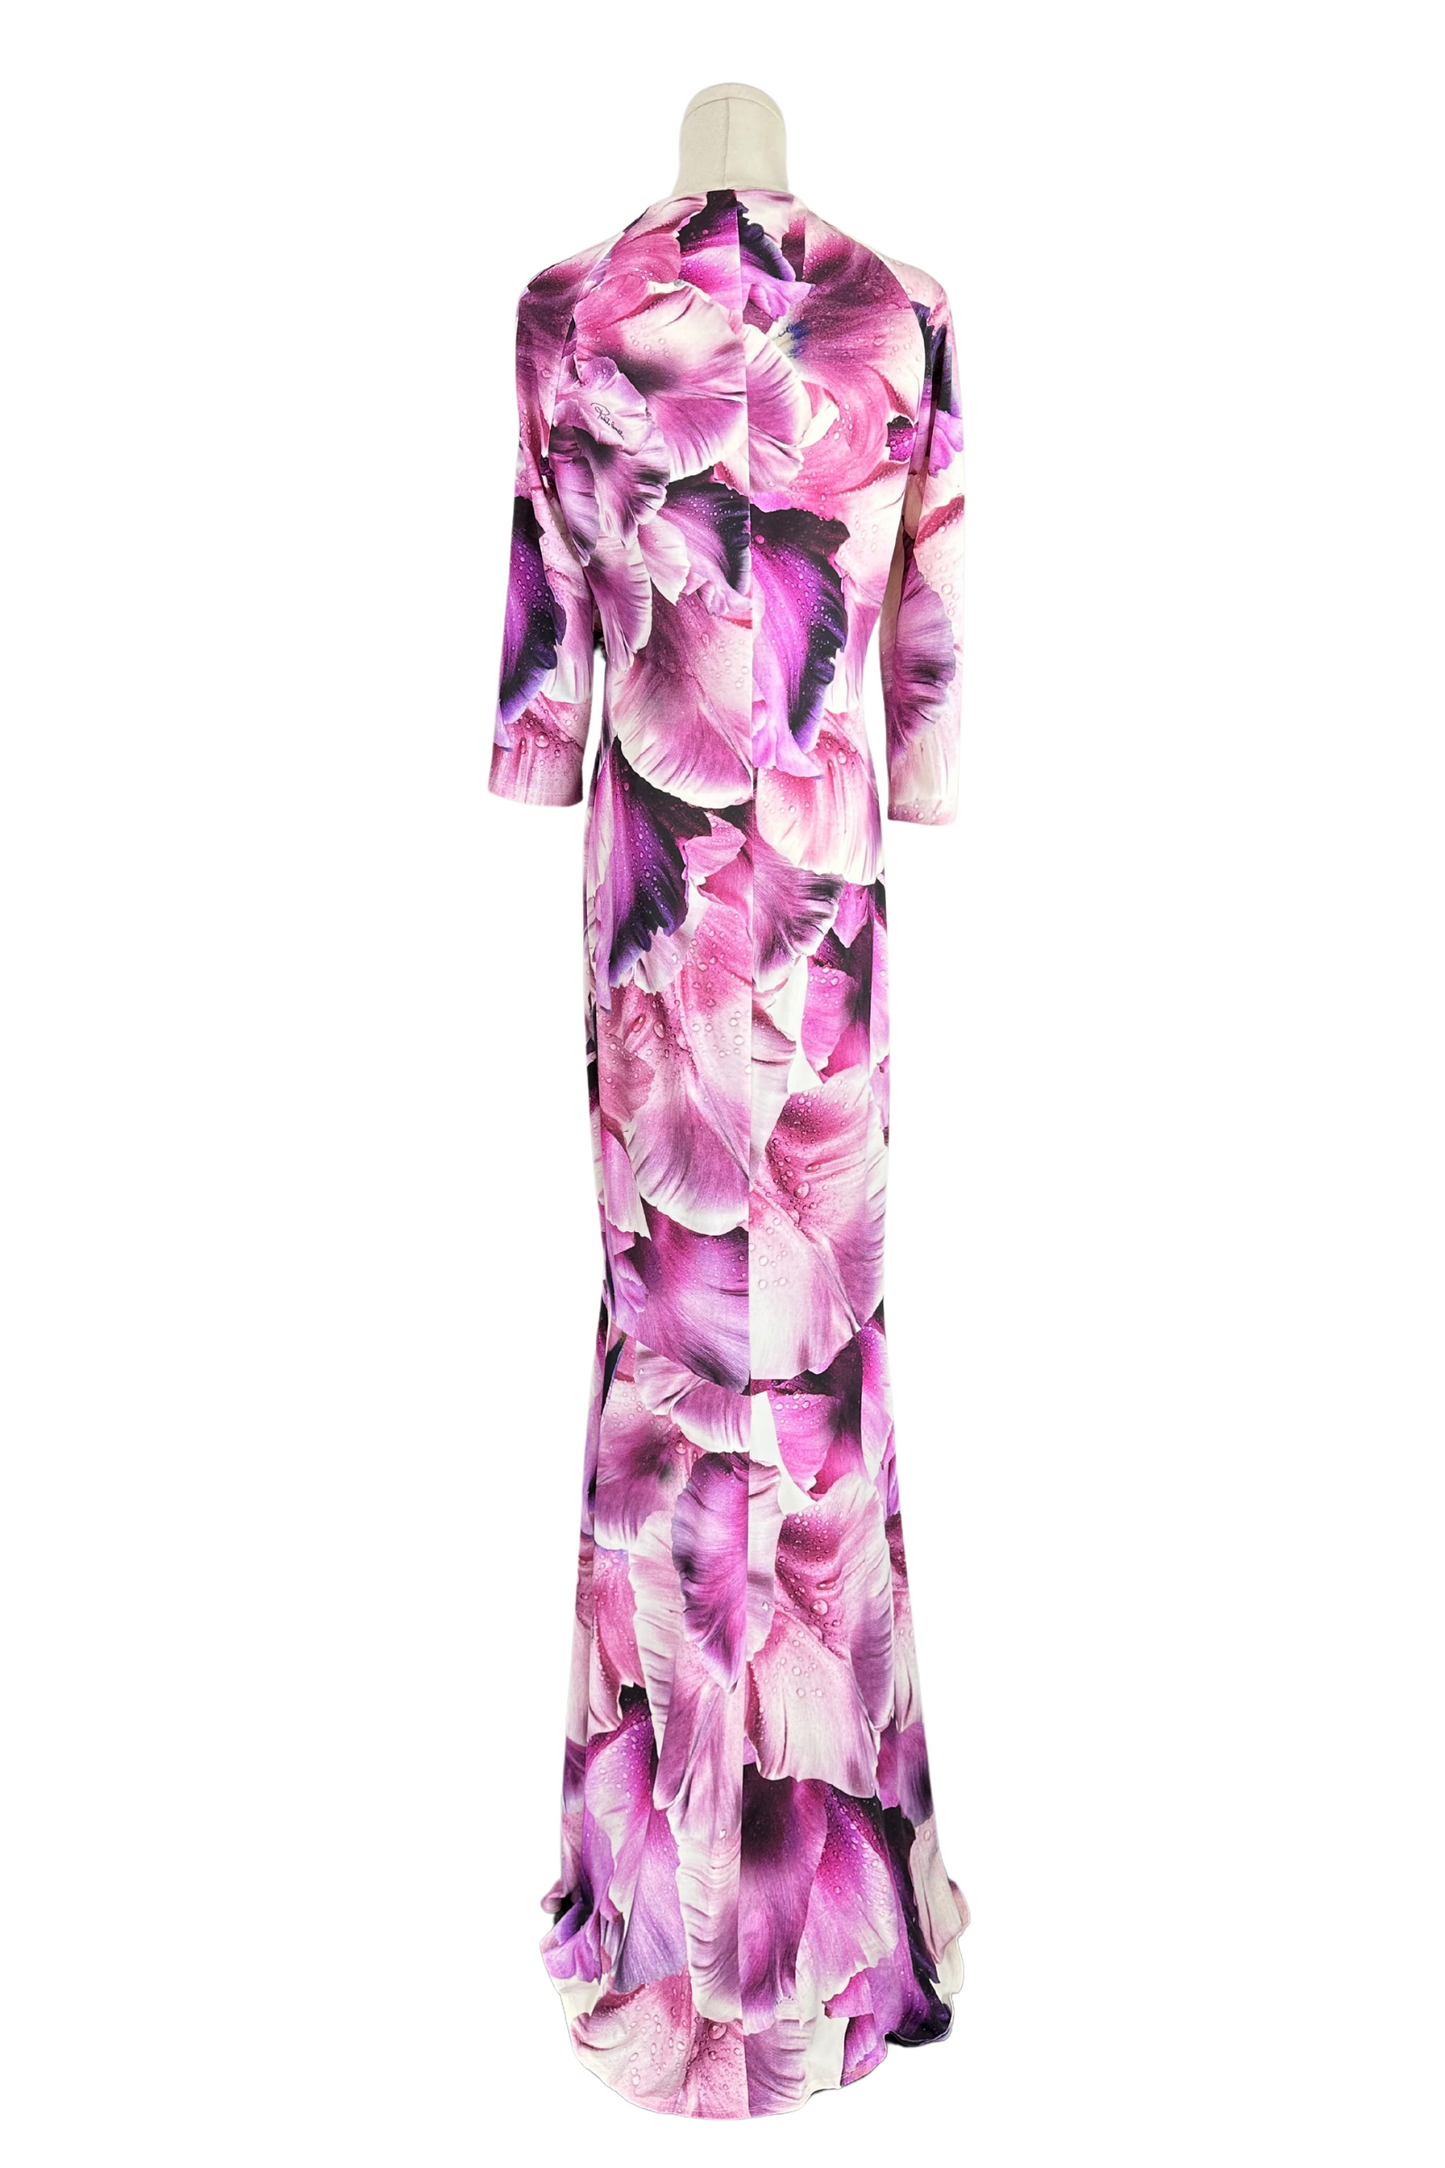 Roberto Cavalli Iris Print Pink Purple Dress Gown Size 48